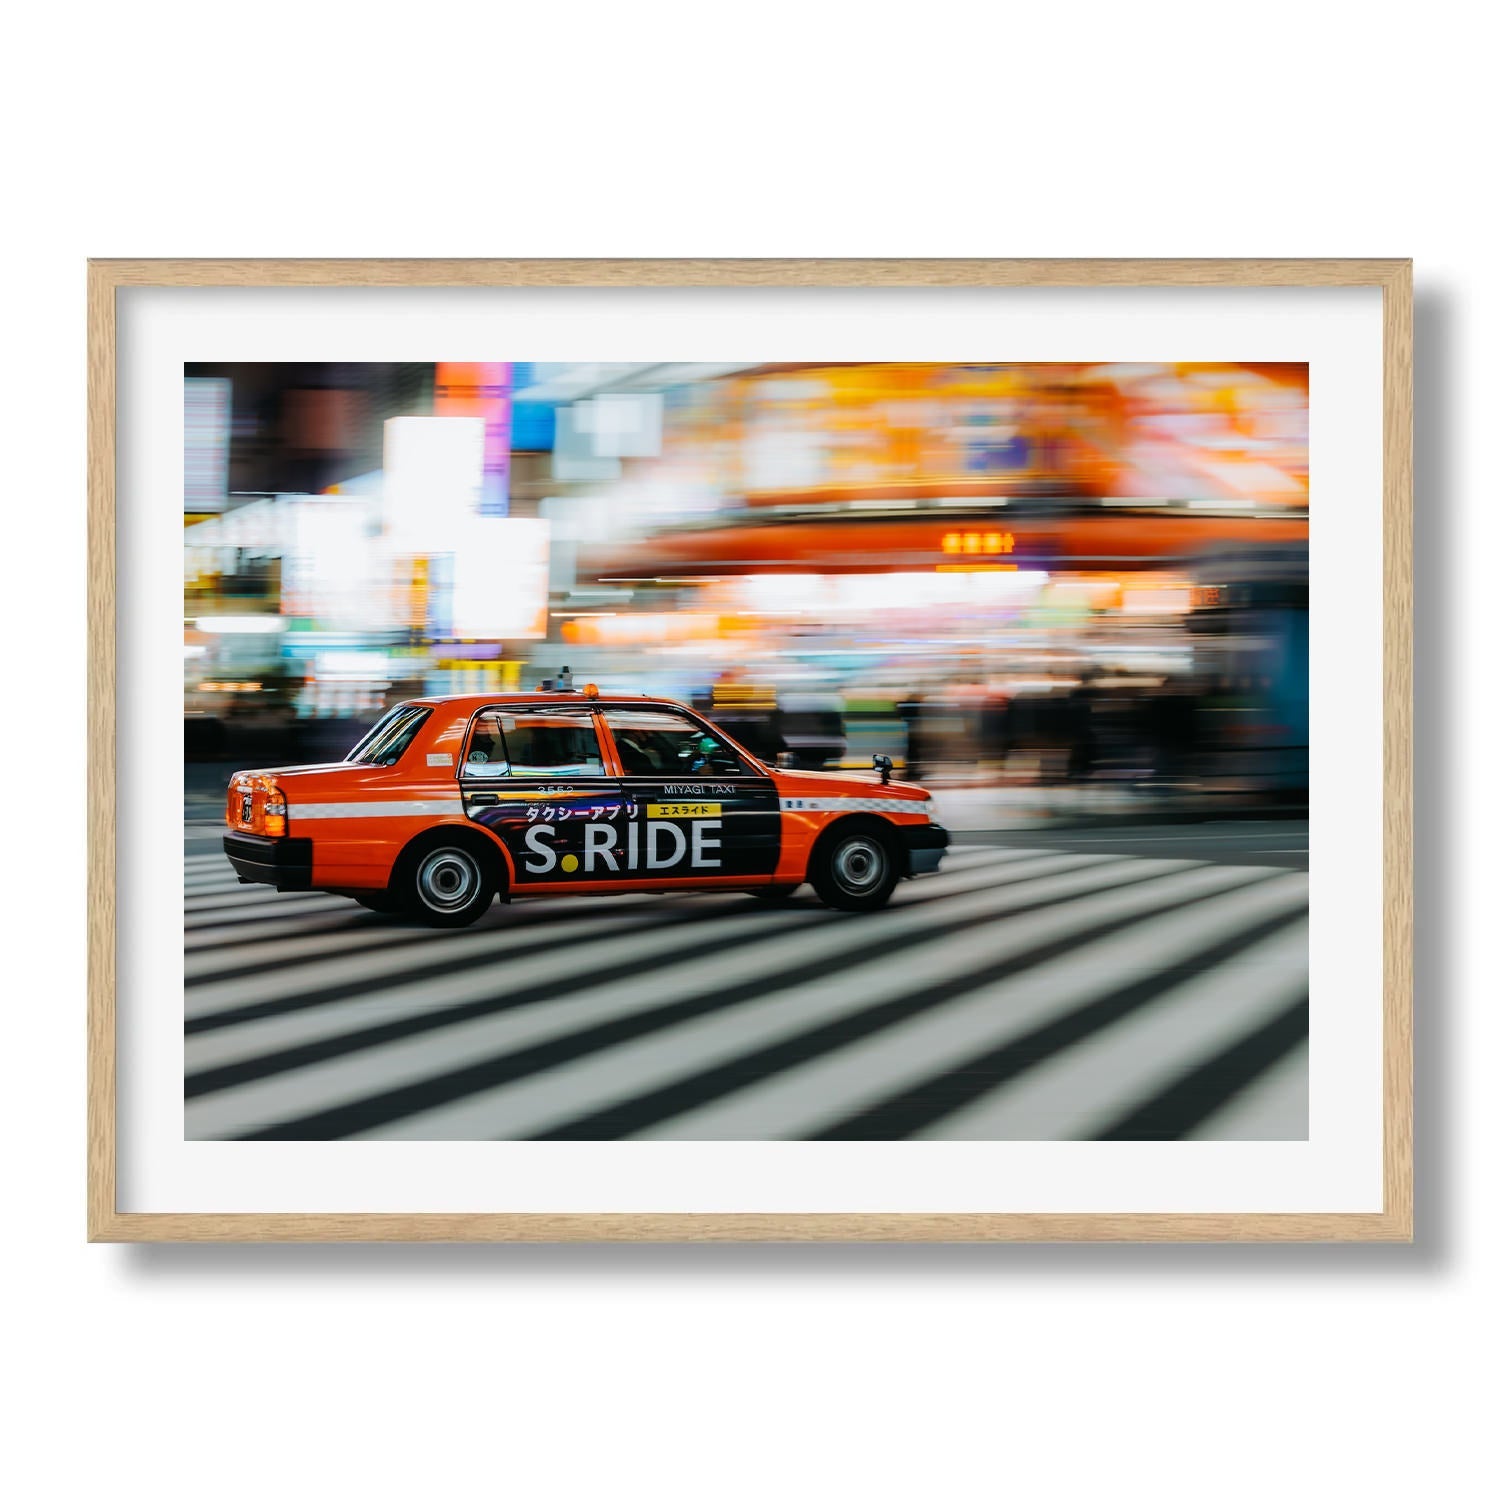 Speeding orange taxi in Shinjuku - Peter Yan Studio